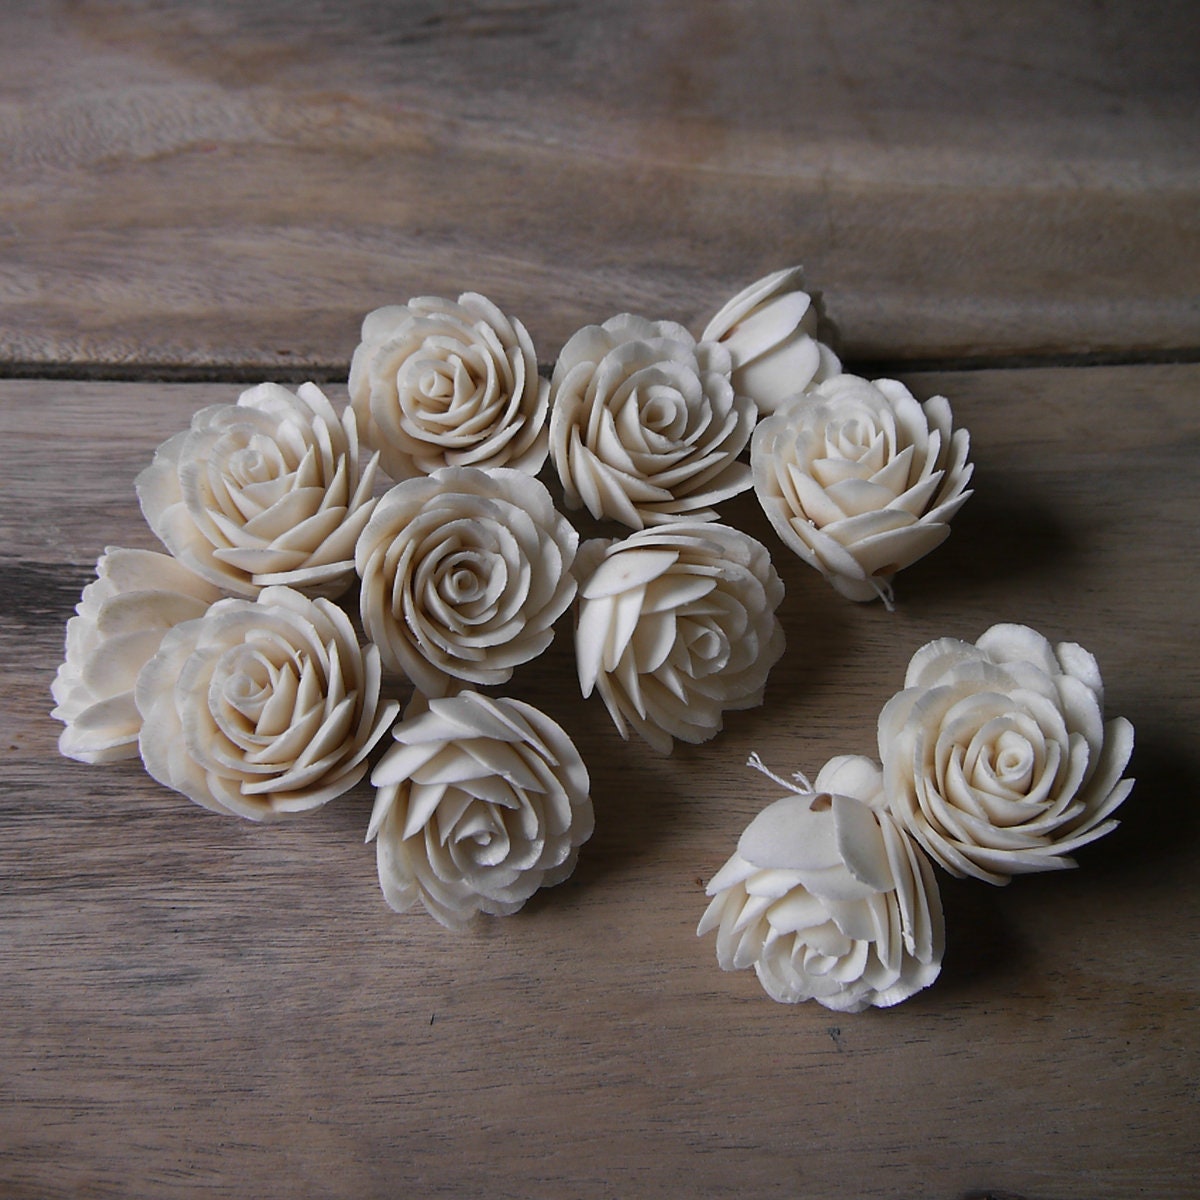 Kaufe 4 Stück Diffusor-Blume mit Baumwollfaden, Holz-Rosenblume